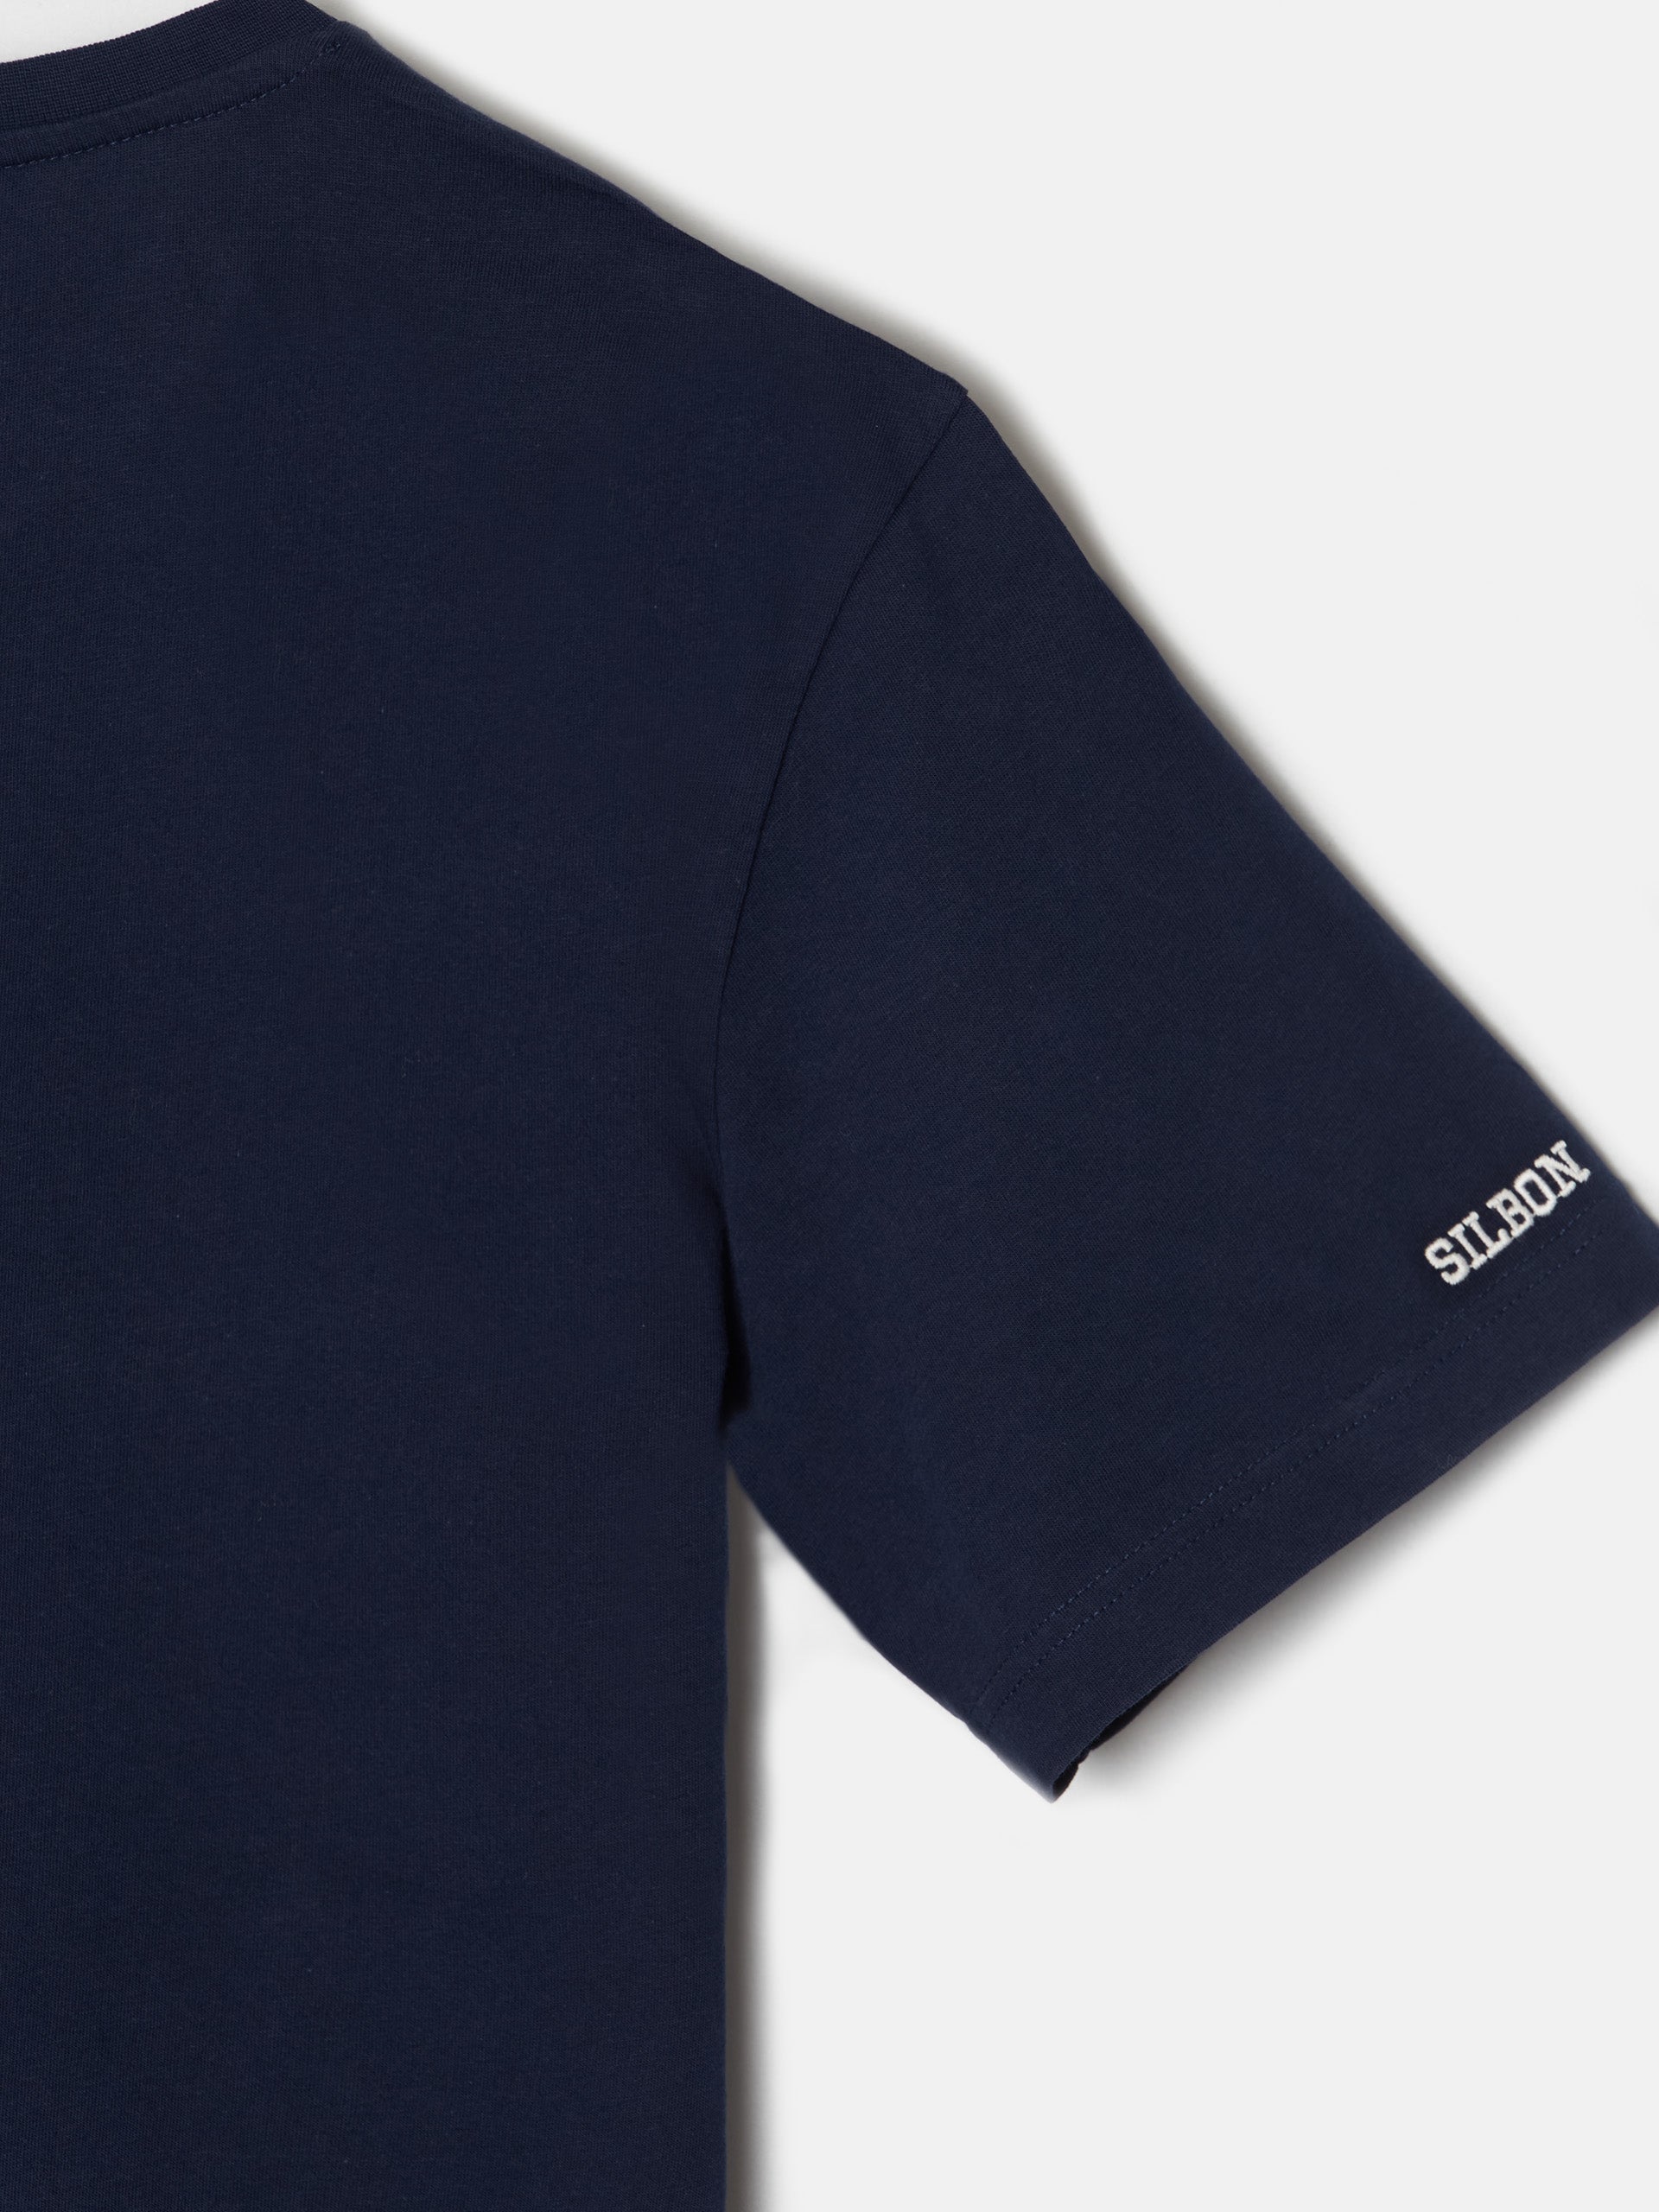 Camiseta silbon miniparche azul marino +